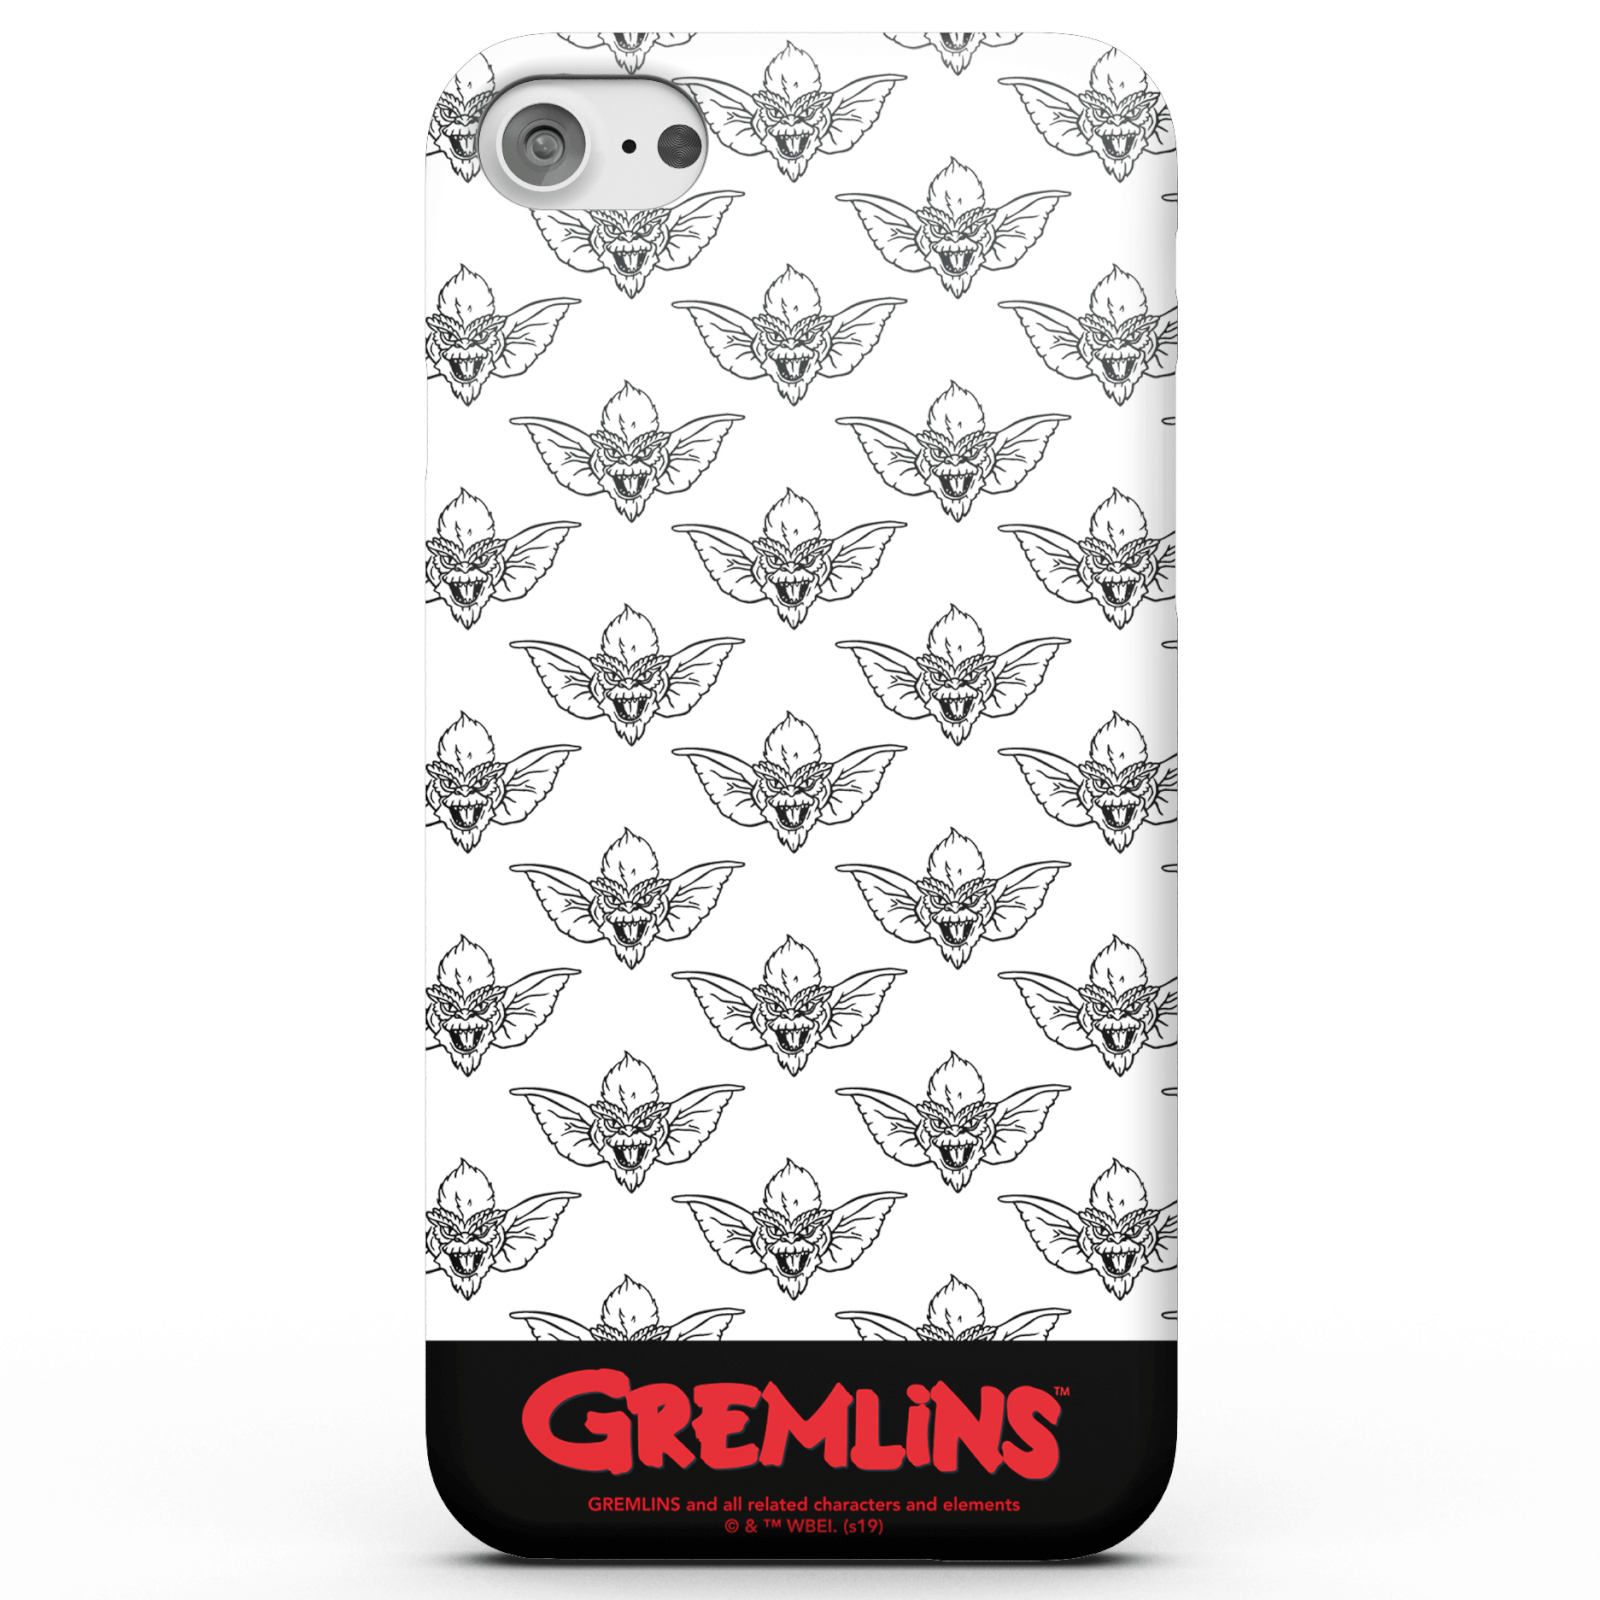 Funda Móvil Gremlins Stripe Pattern para iPhone y Android - iPhone 5/5s - Carcasa rígida - Mate